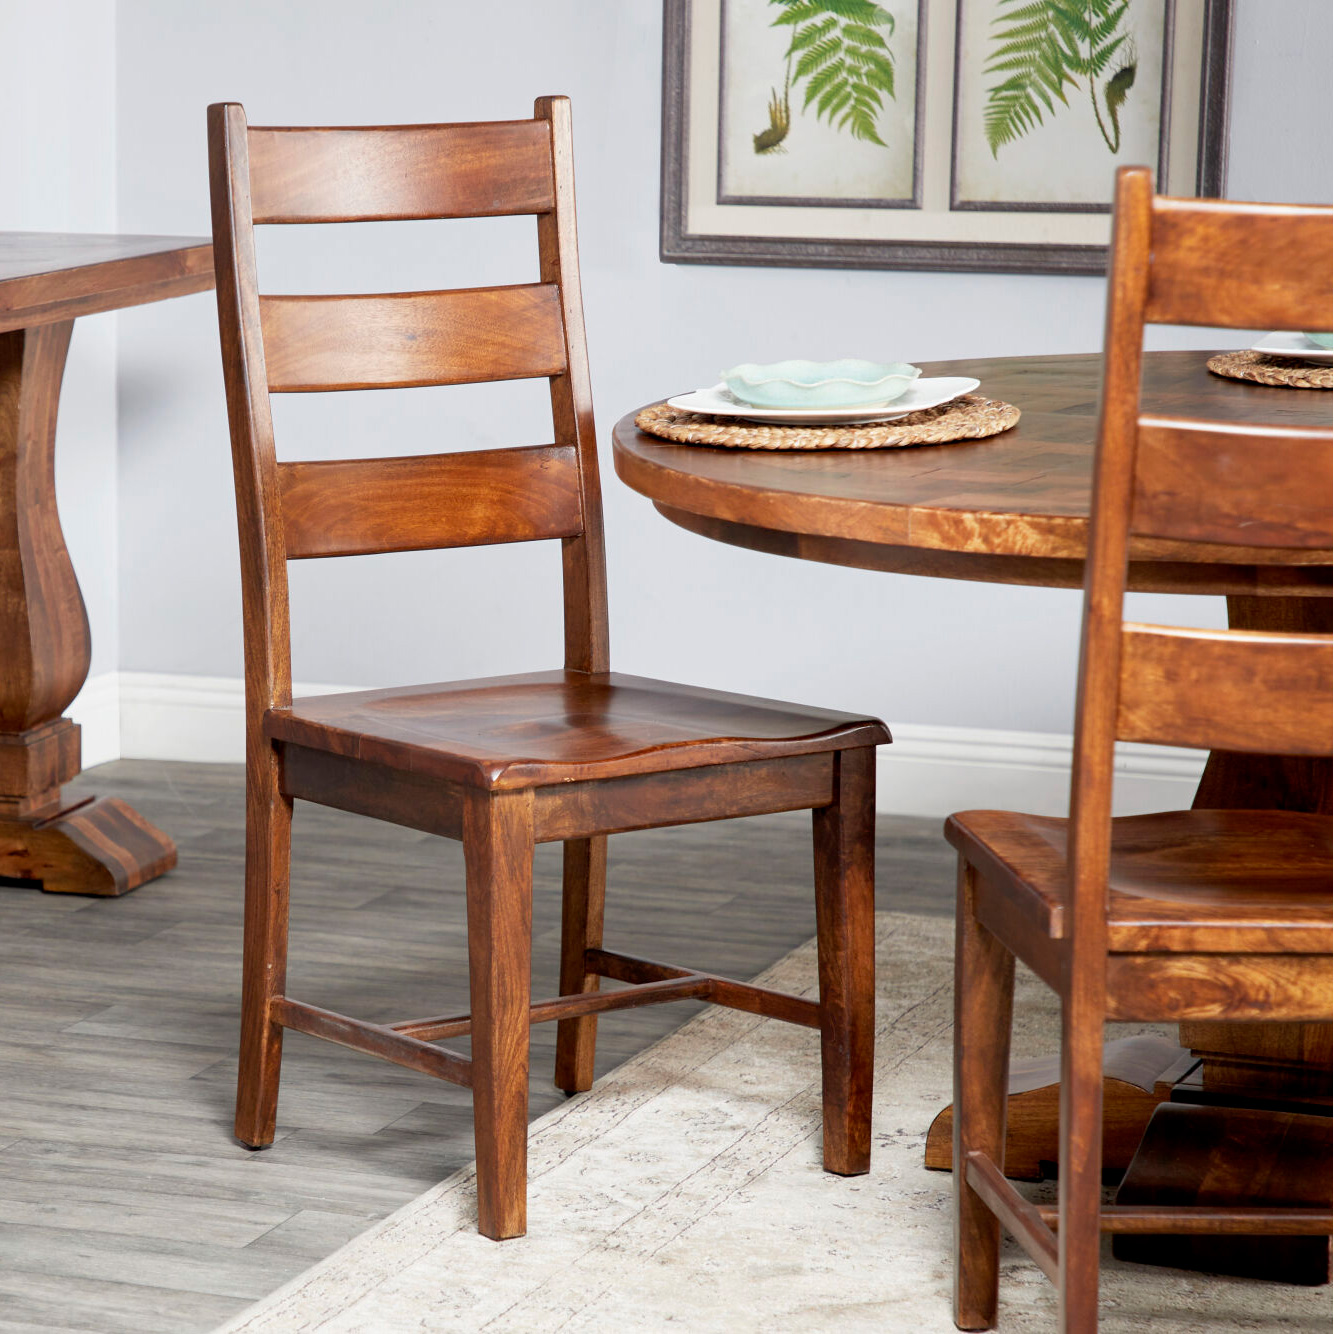 https://www.homethreads.com/files/uma/603947-brown-wood-rustic-set-of-2-dining-chairs-1.jpg